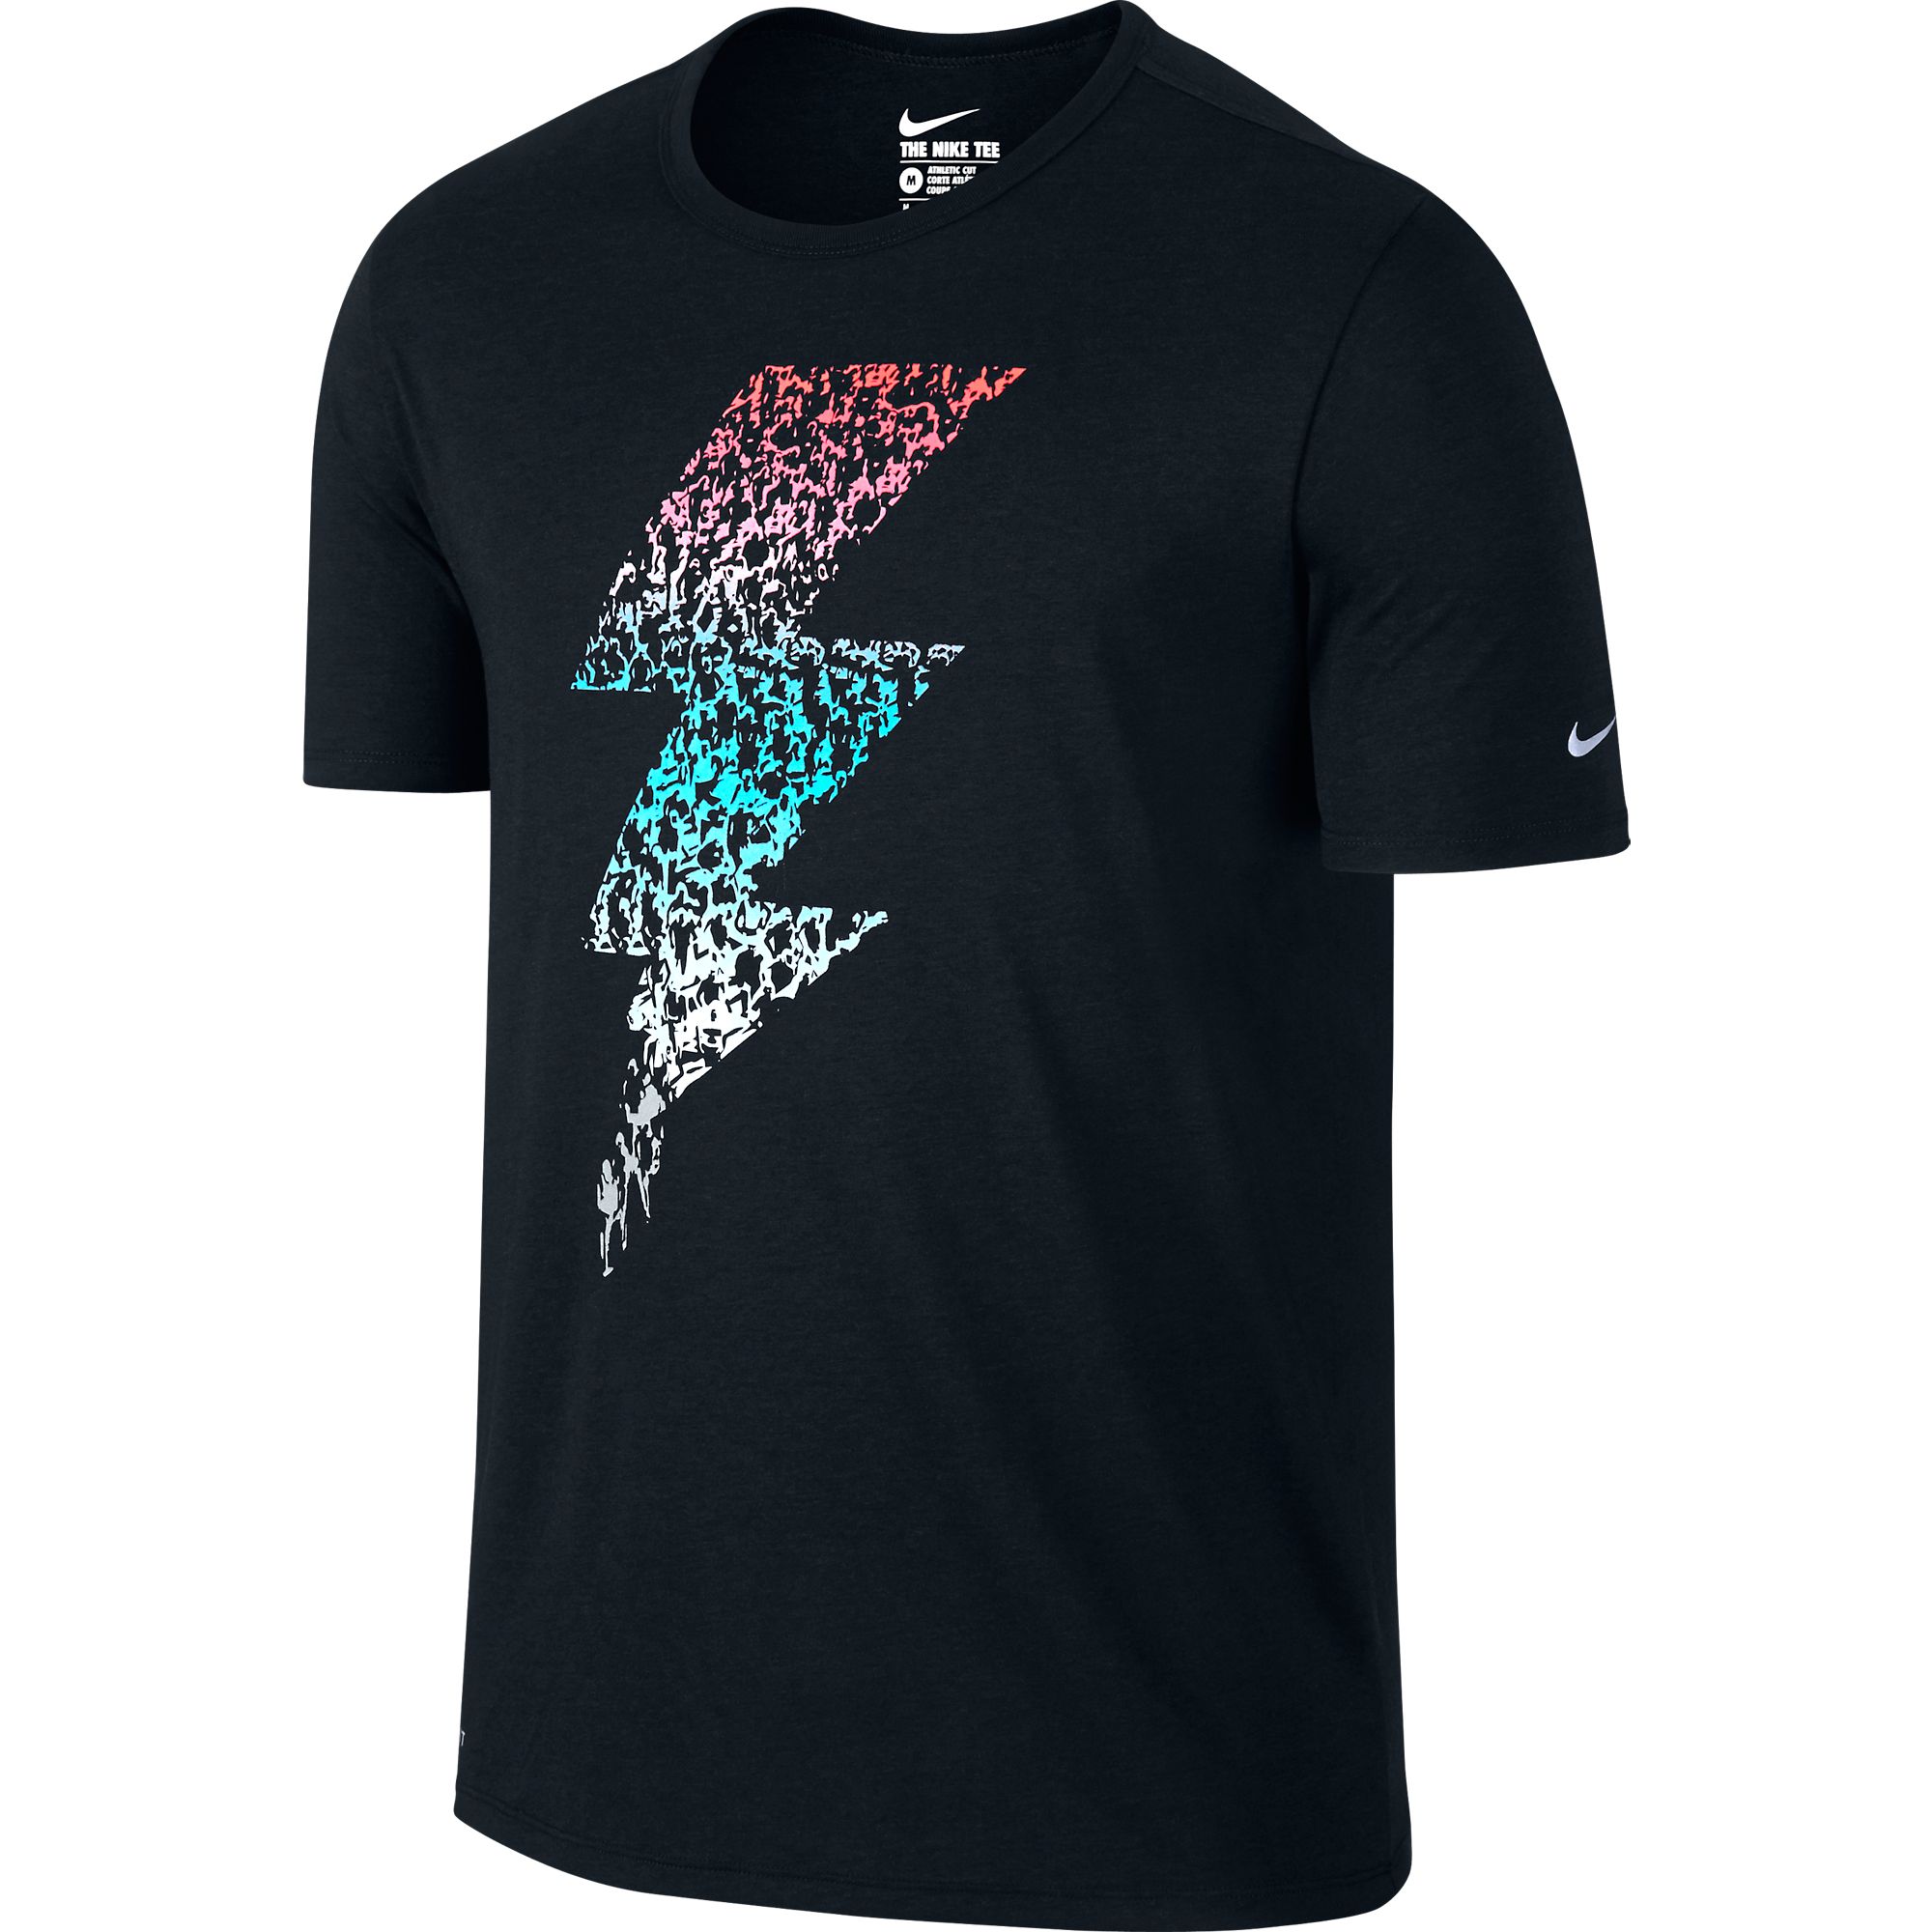 Nike Men's Run Flash T-Shirt Black/Hyper Orange 717040-010 | eBay